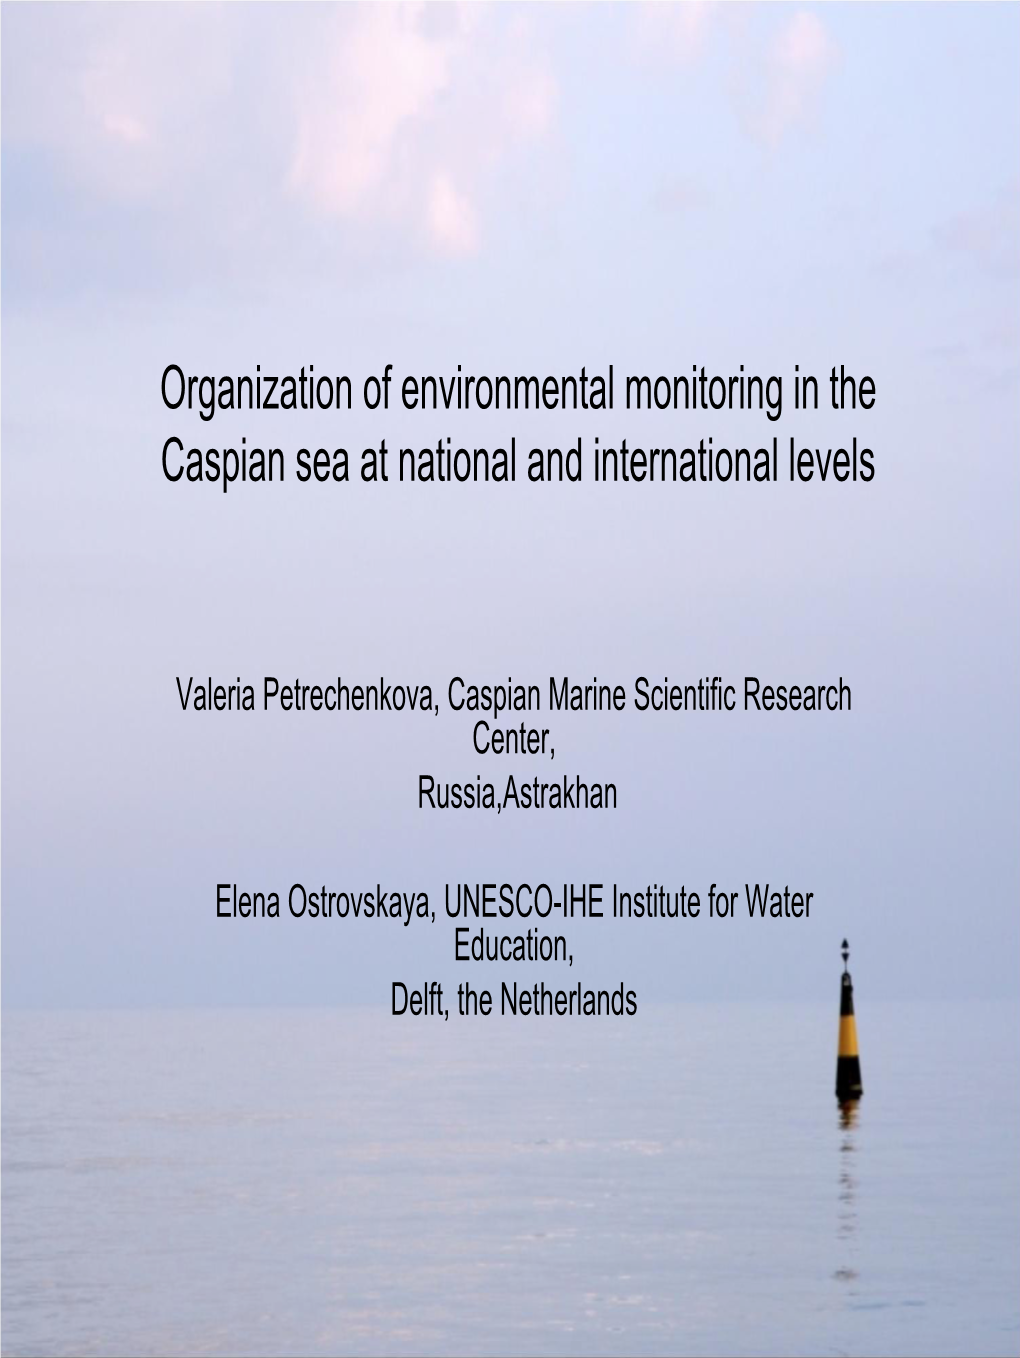 Organization of Environmental Monitoring in the Caspian Sea at National and International Levels